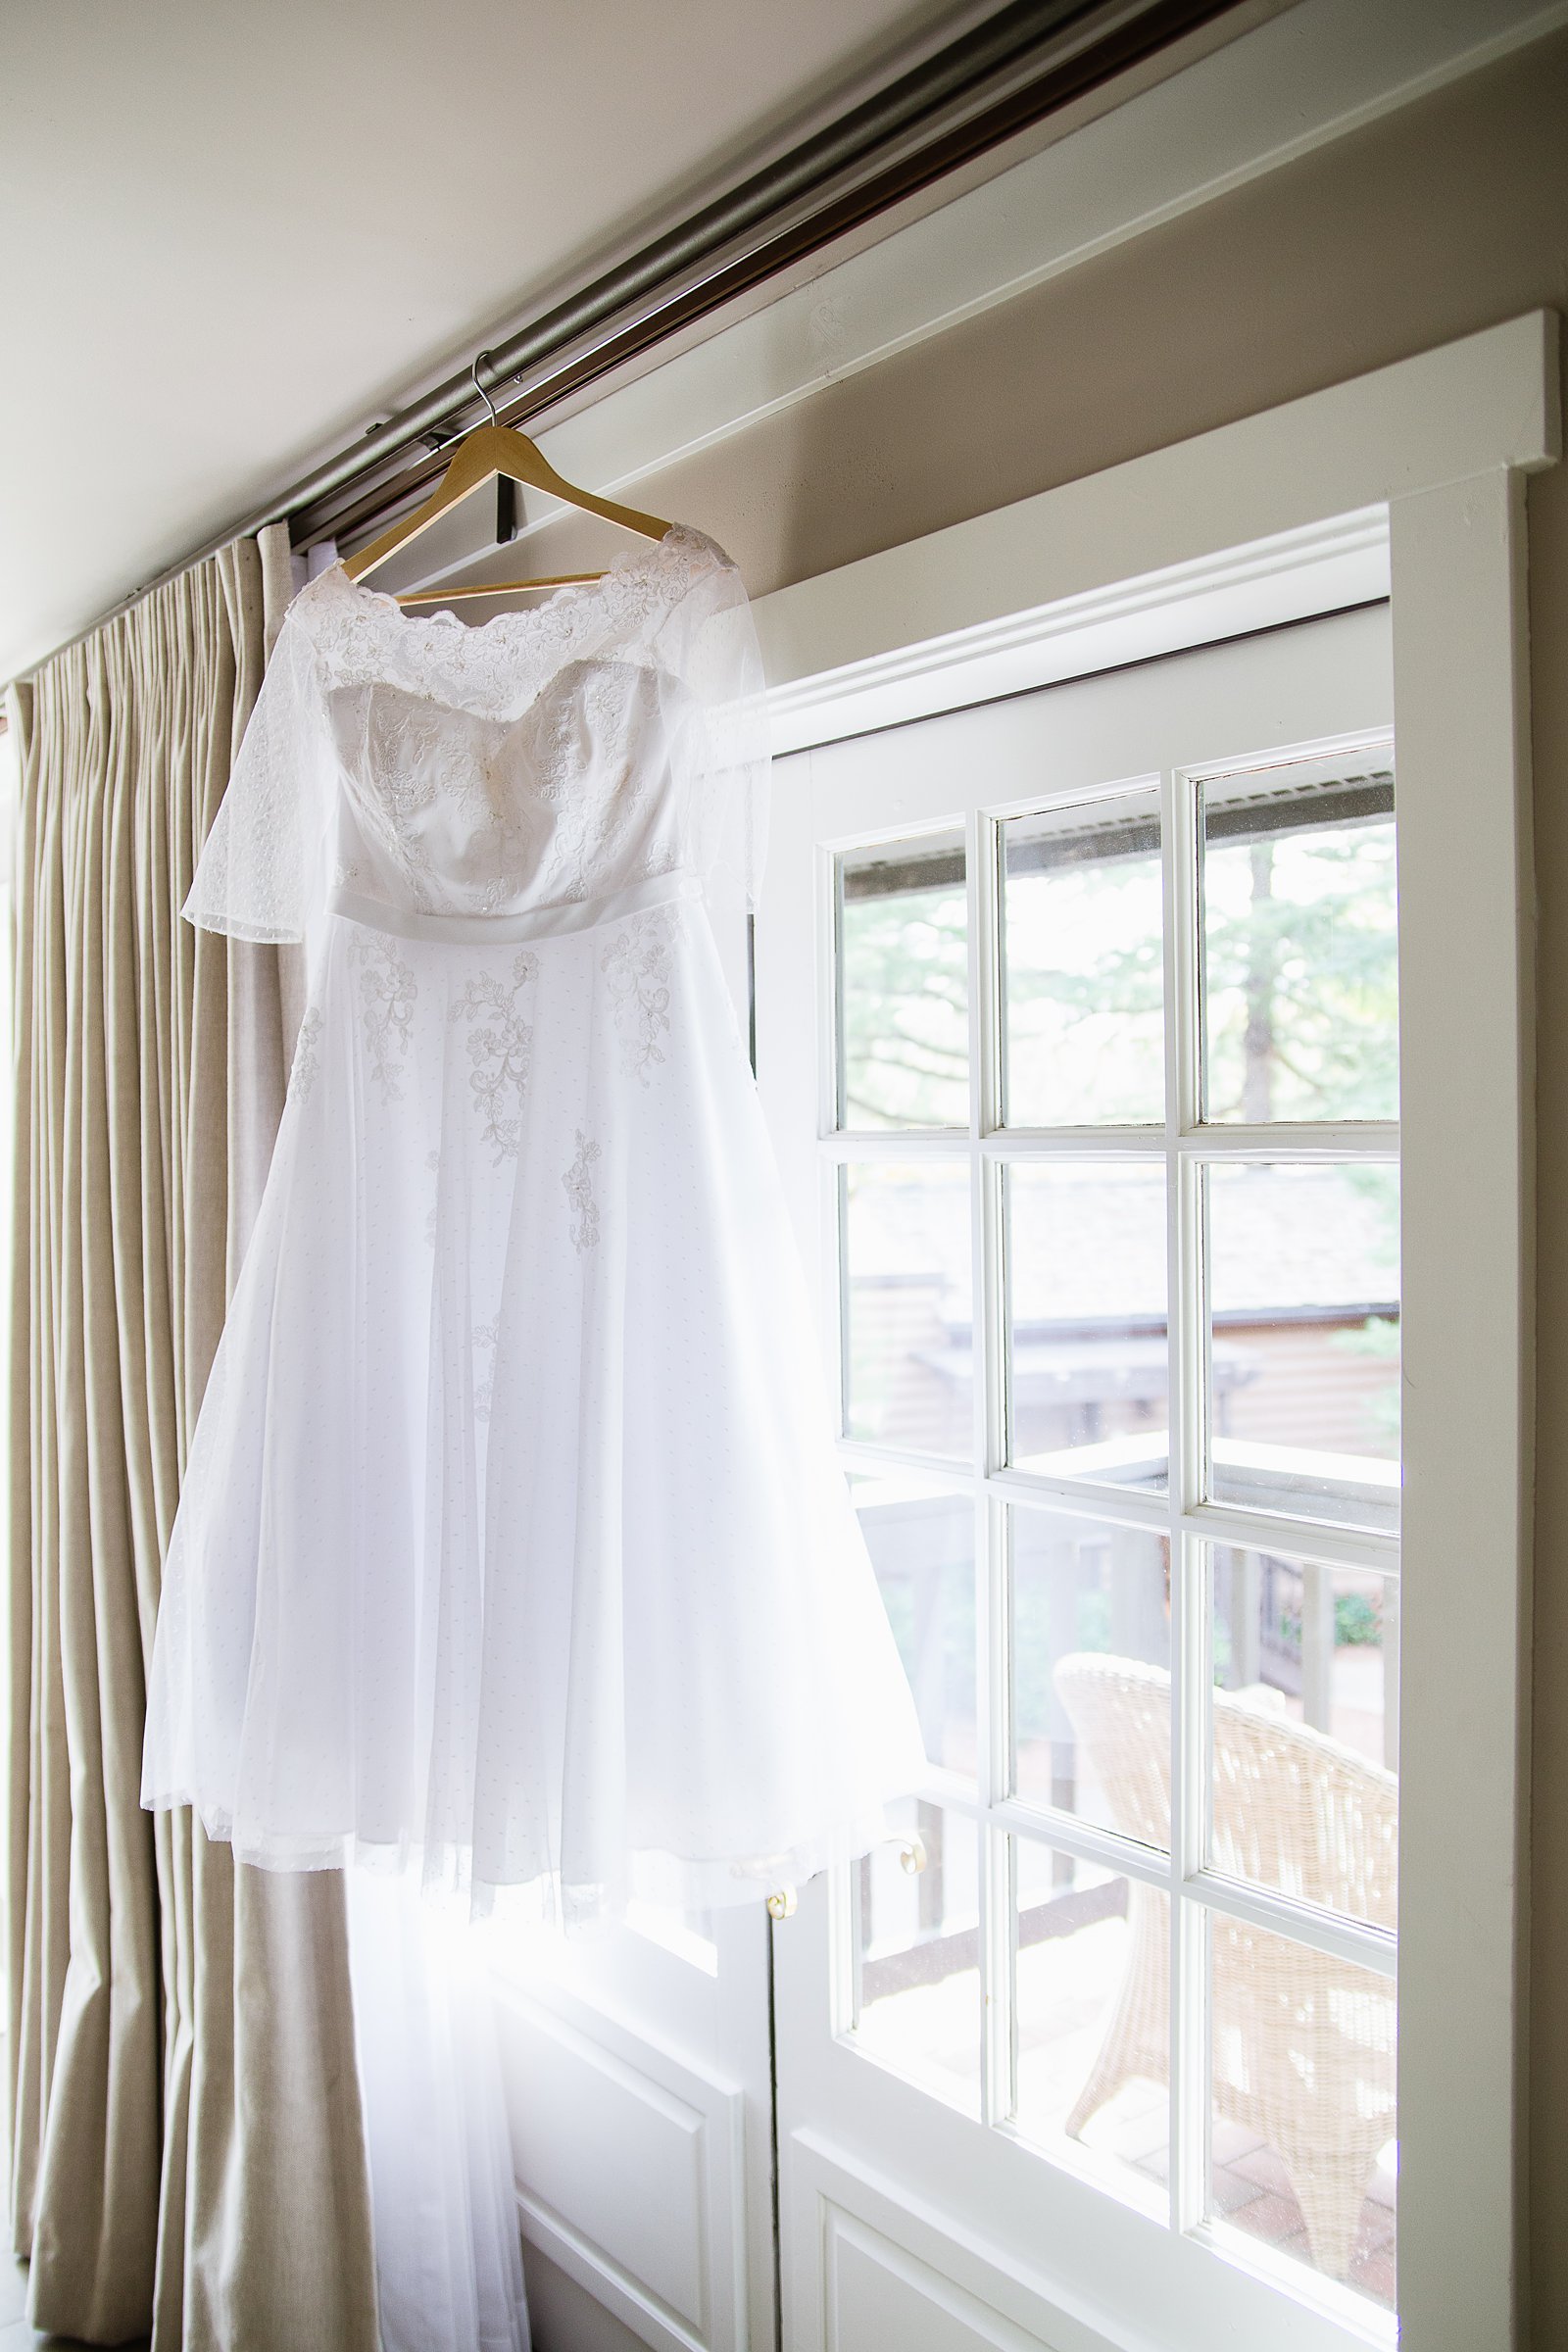 Bride's vintage inspired tea length wedding dress for her L'Auberge de Sedona wedding by PMA Photography.